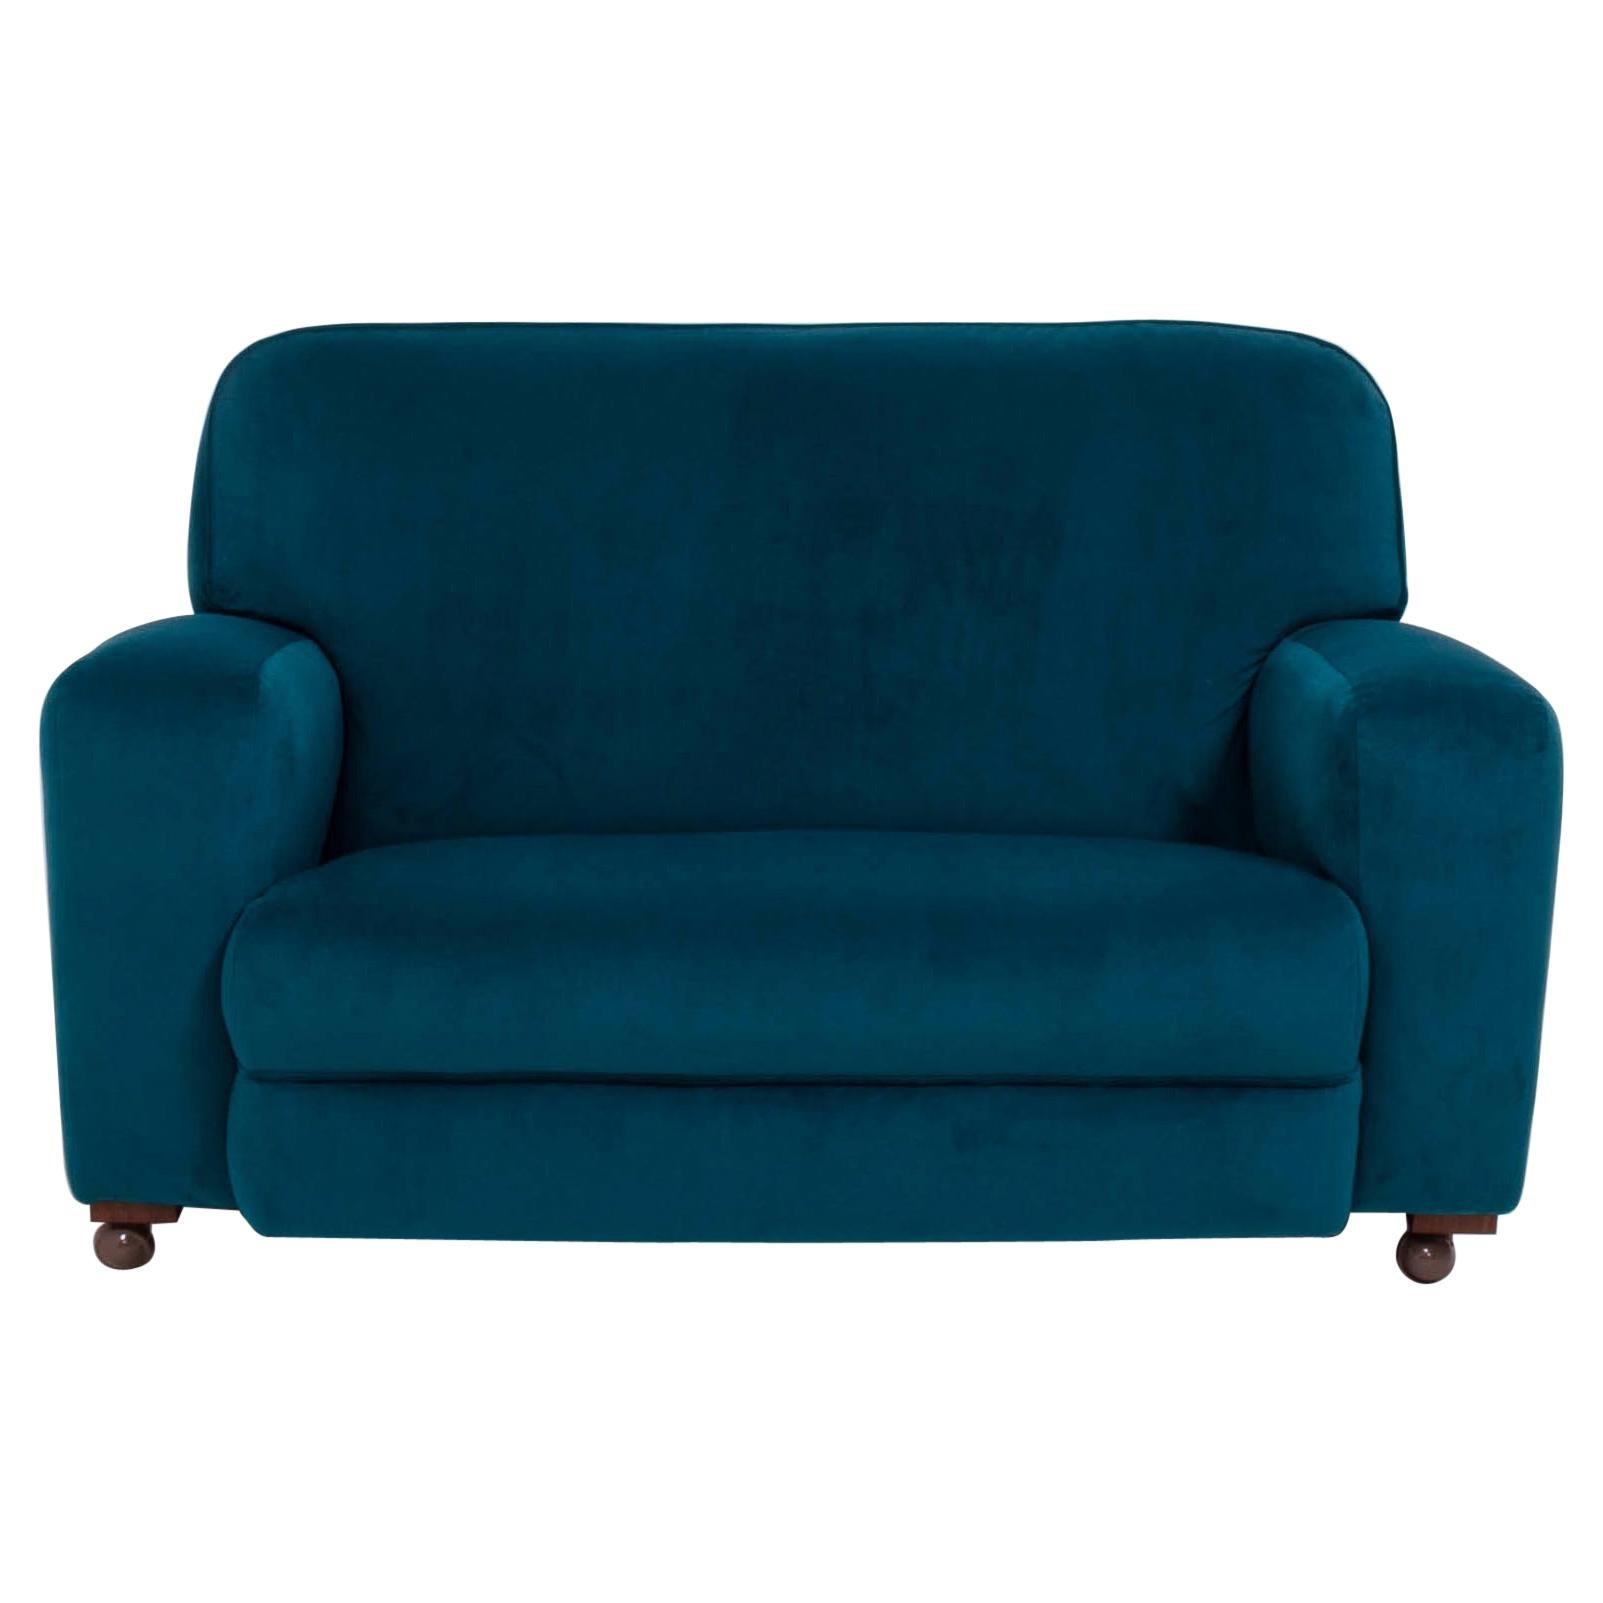 Original 1930s Art Deco Curved Blue Teal Velvet Sofa Newly Upholstered